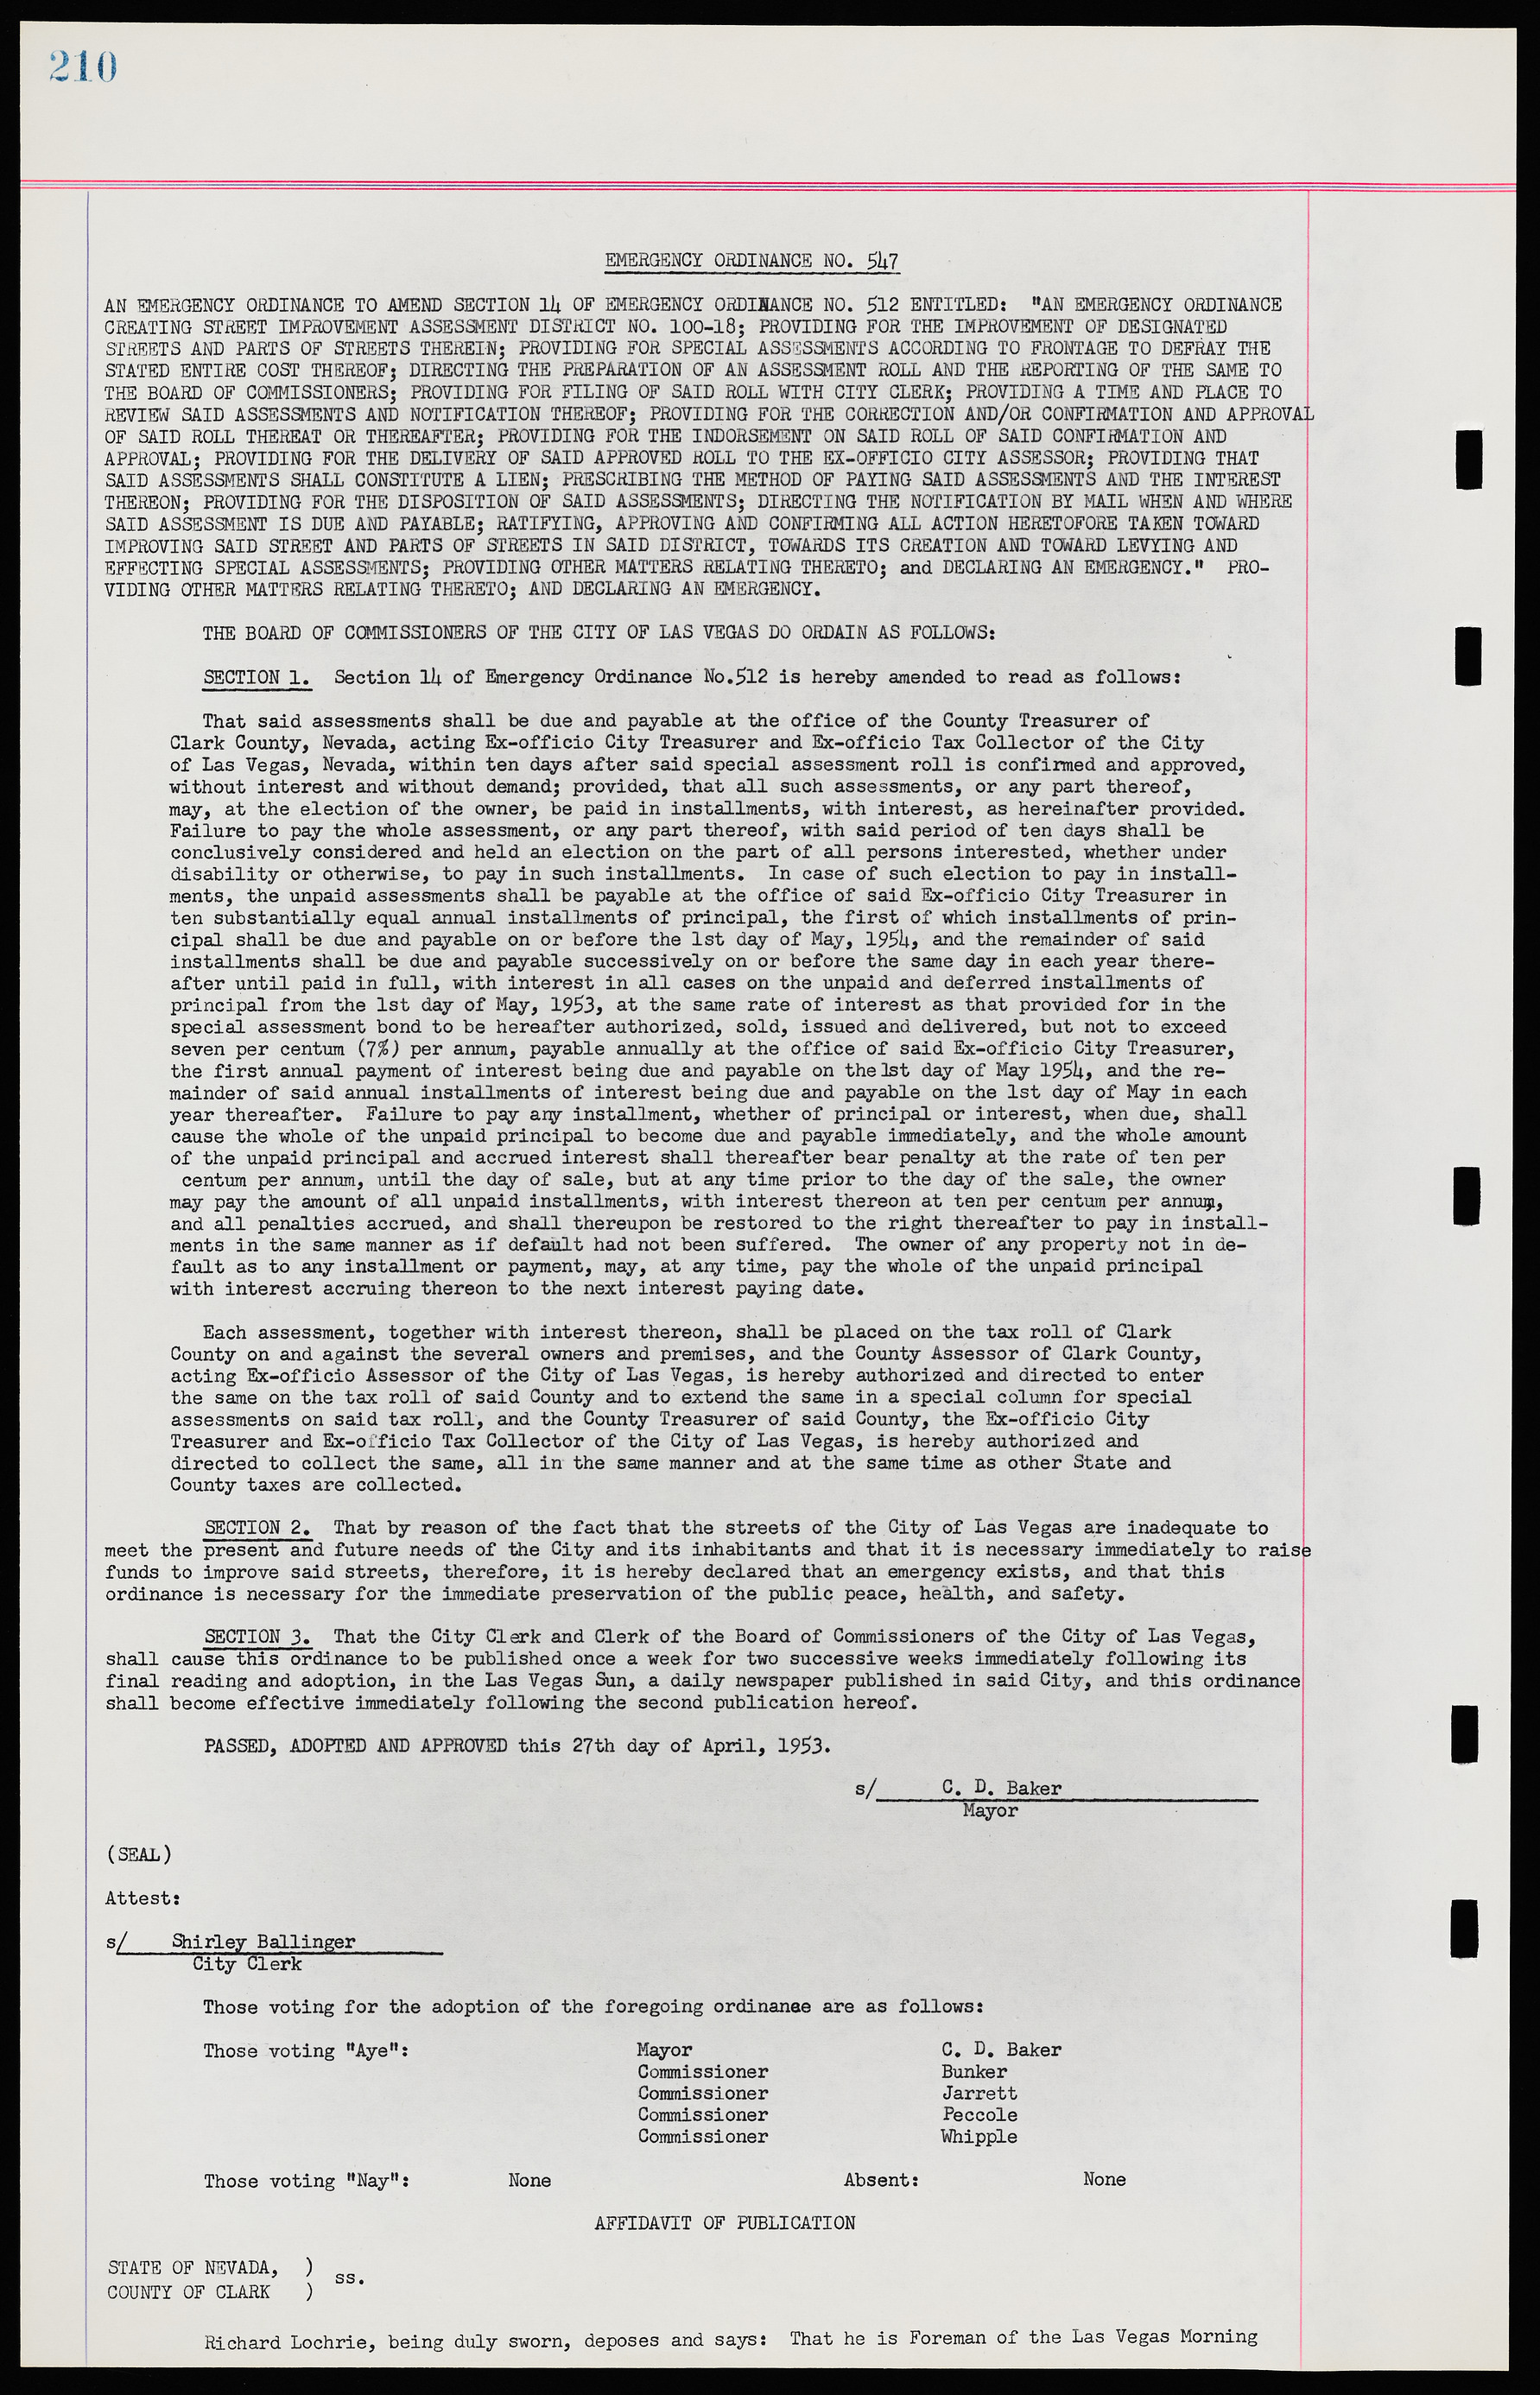 Las Vegas City Ordinances, November 13, 1950 to August 6, 1958, lvc000015-218